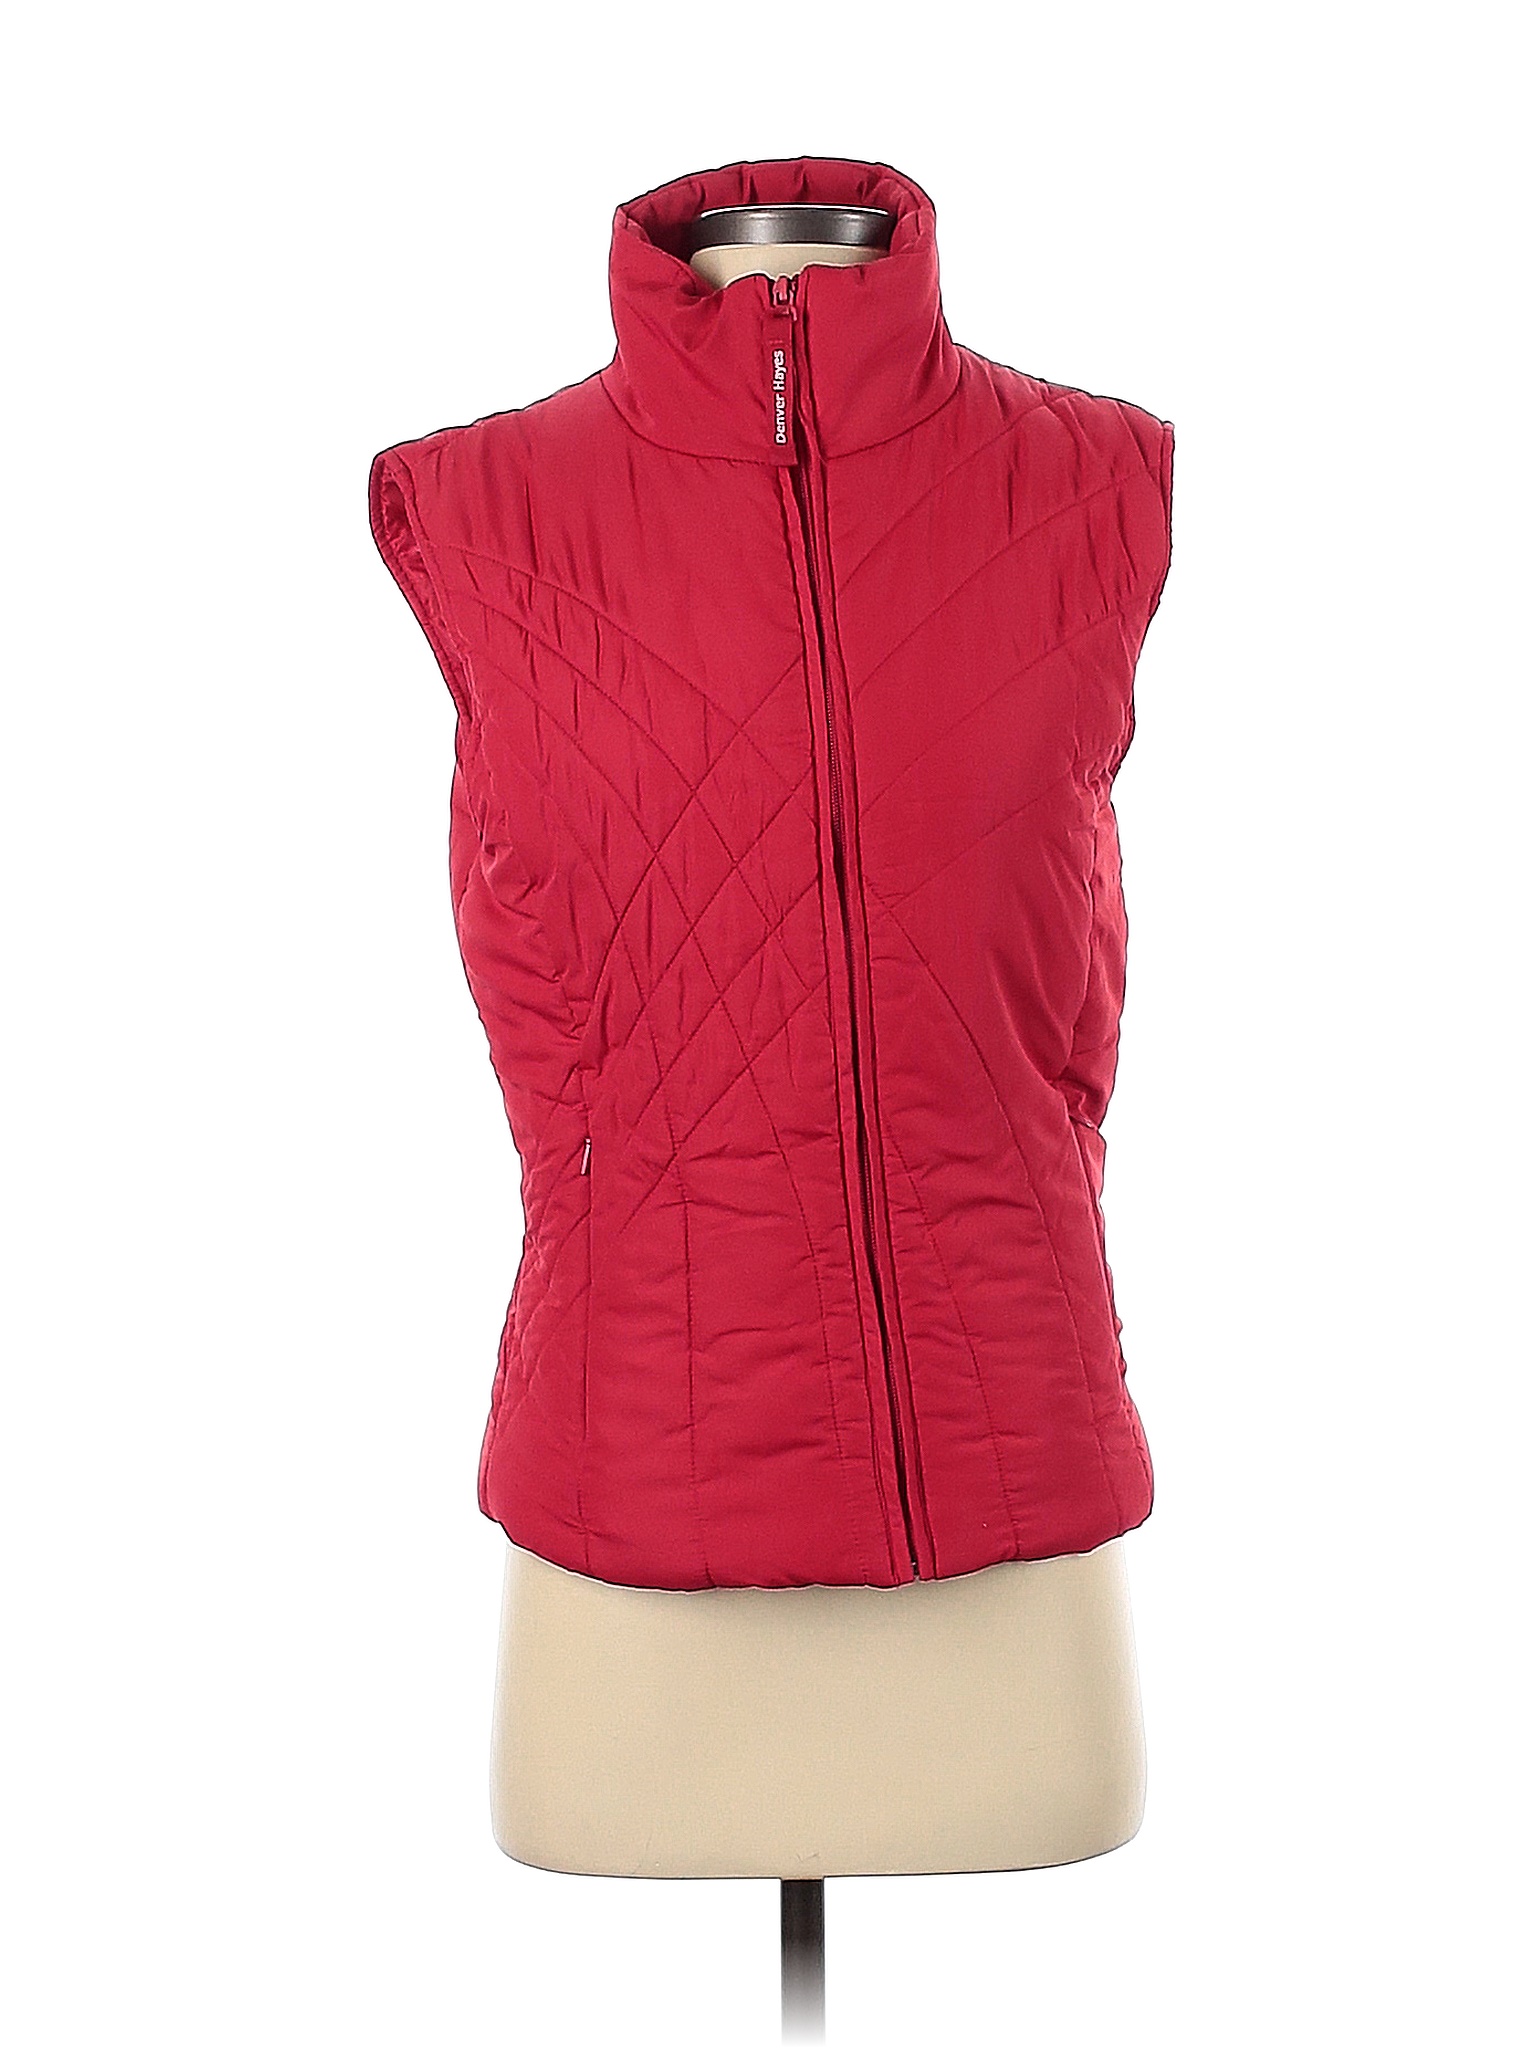 Denver Hayes 100% Polyester Solid Colored Red Vest Size S - 68